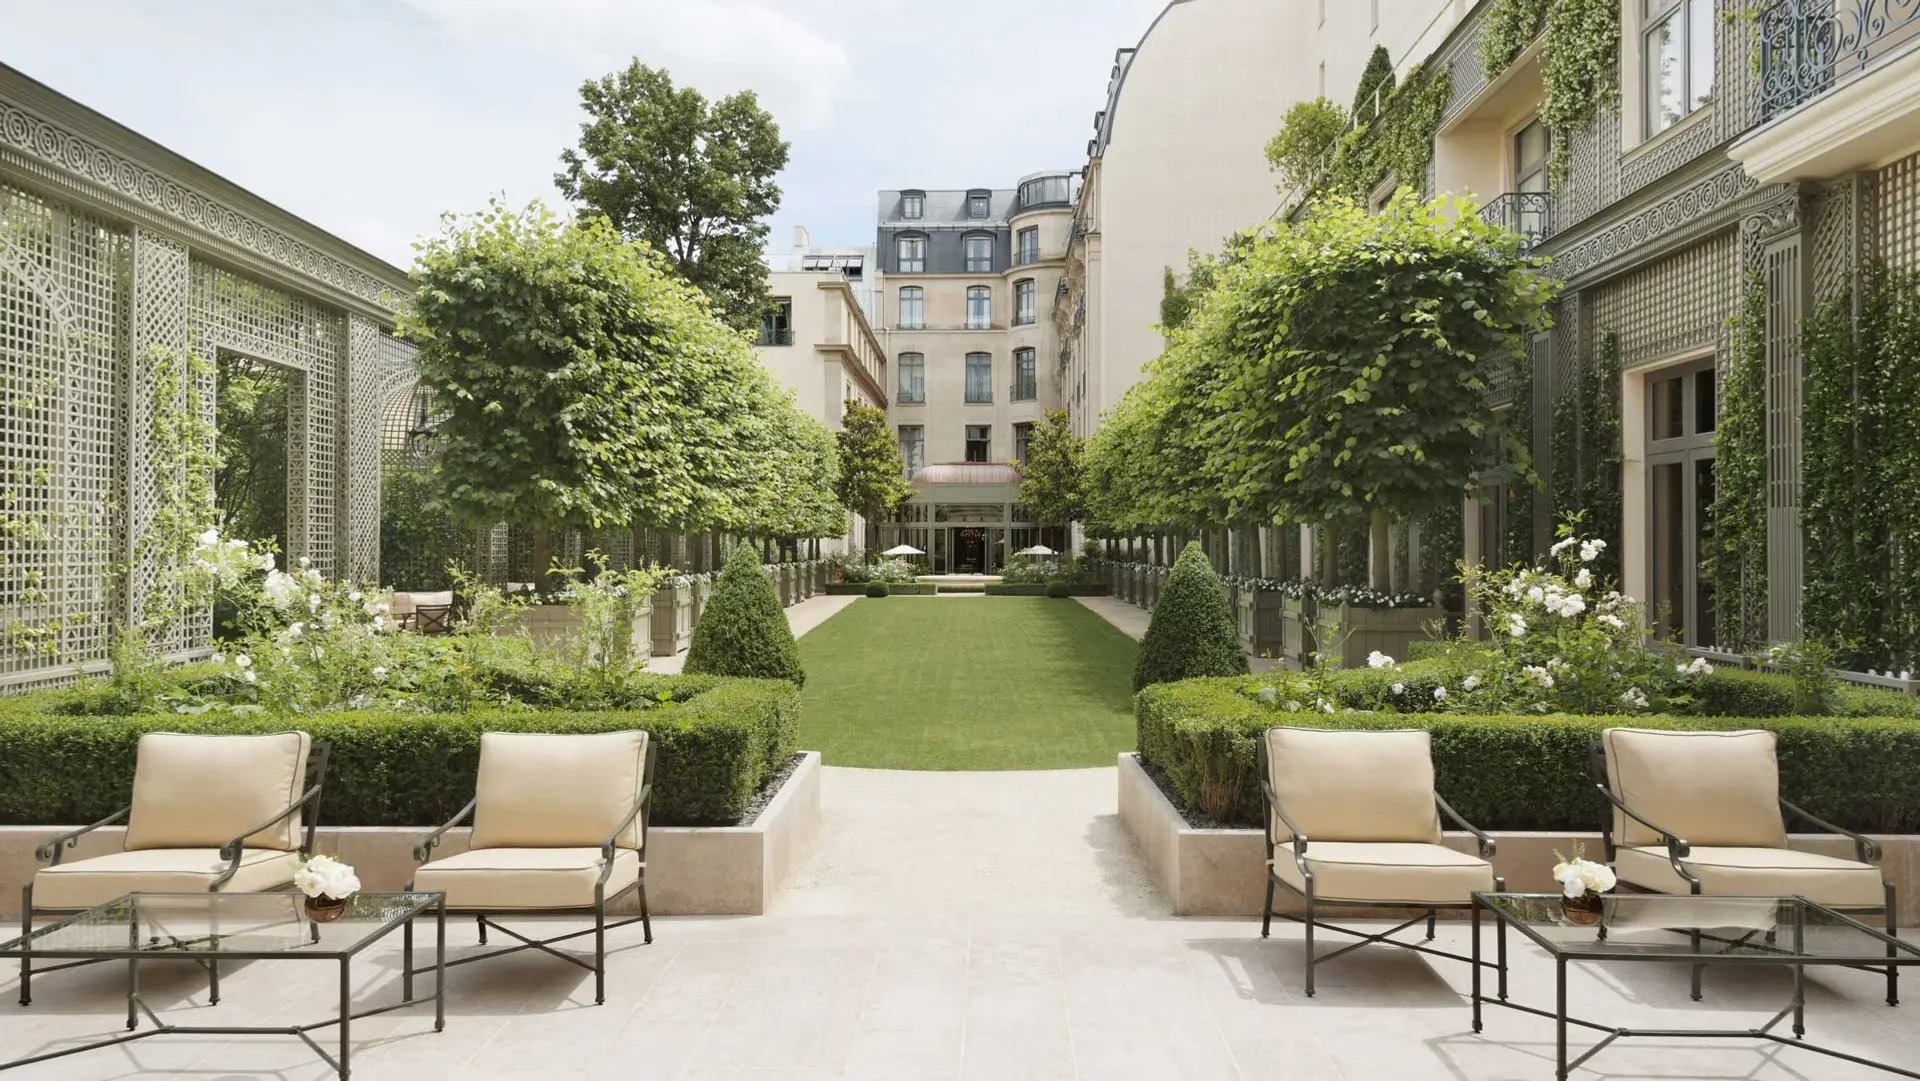 Hotel review Service & Facilities' - Ritz Paris - 3